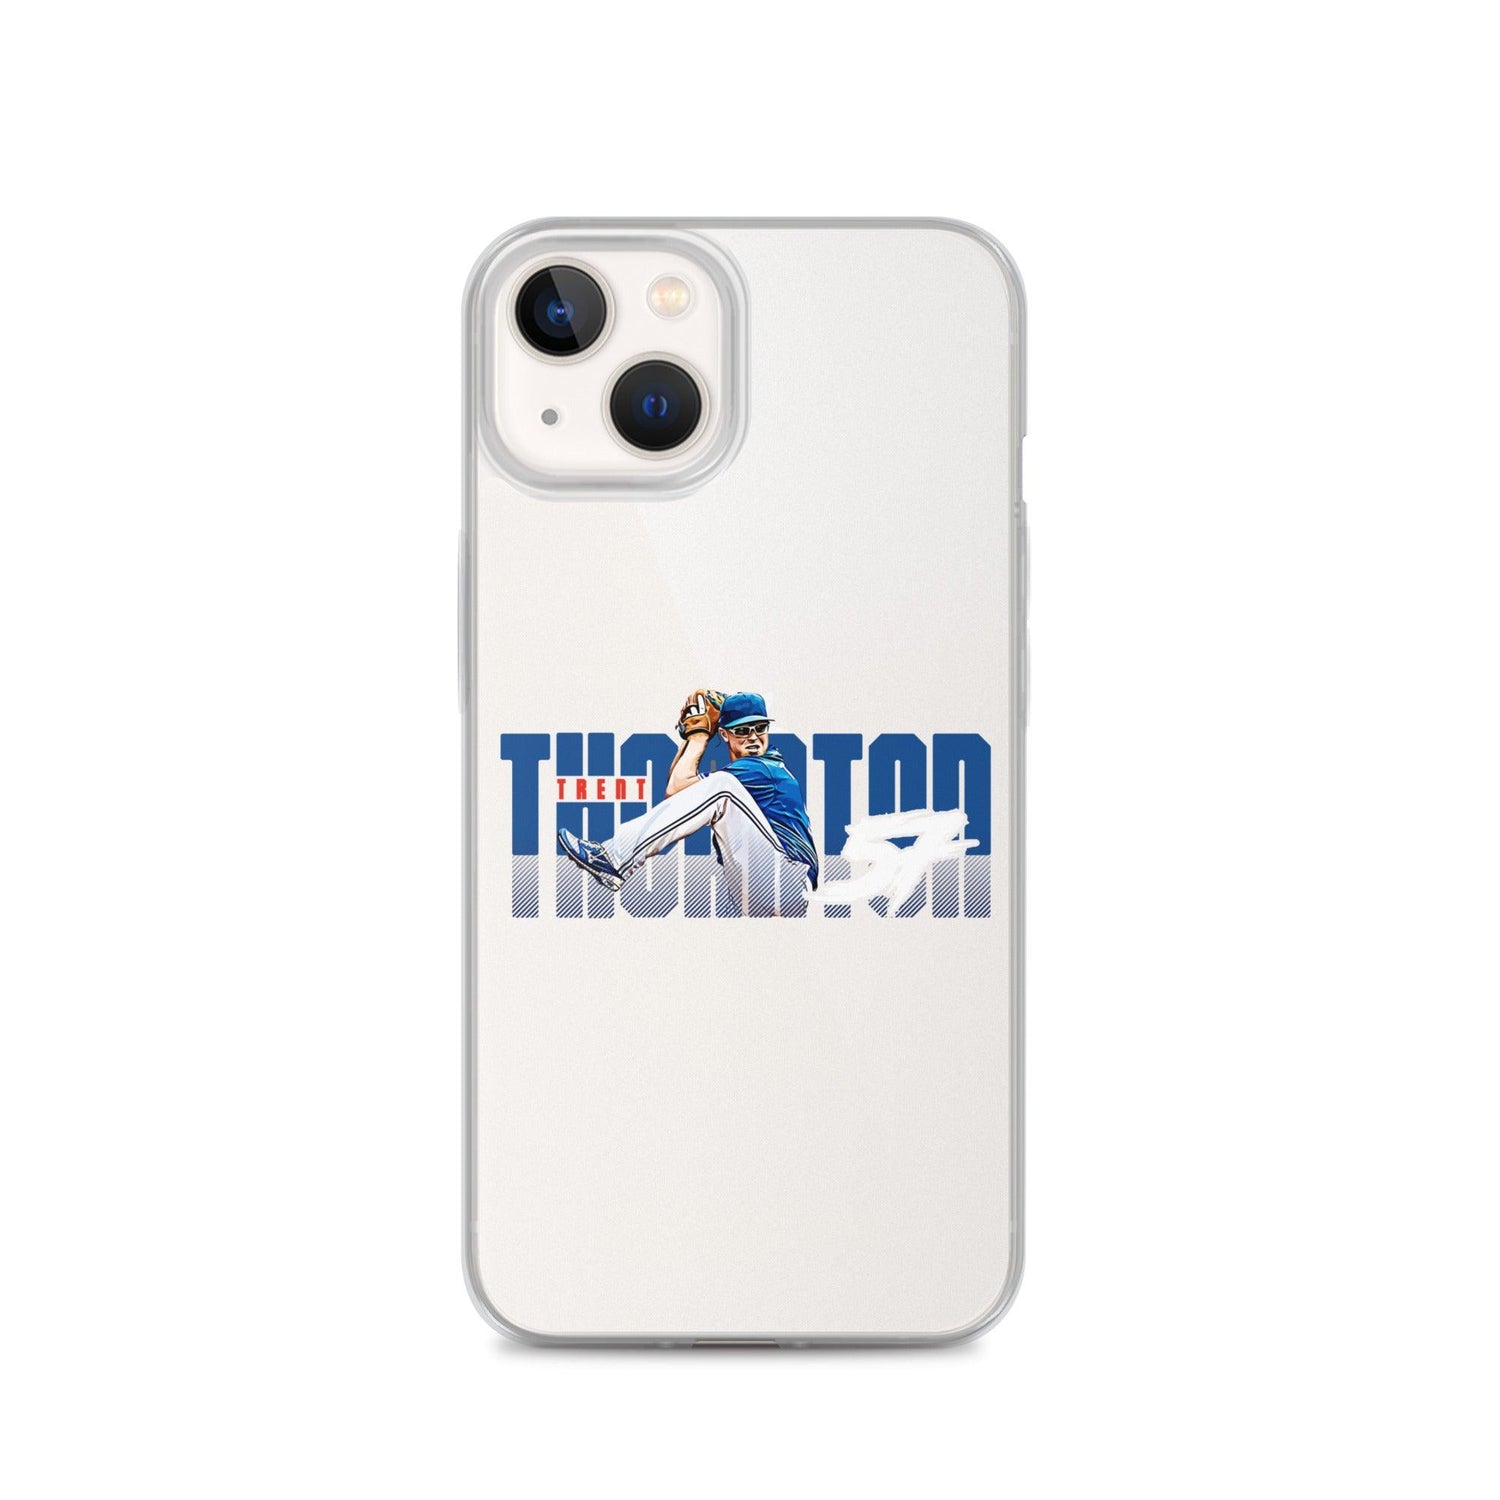 Trent Thornton “Essential” iPhone Case - Fan Arch